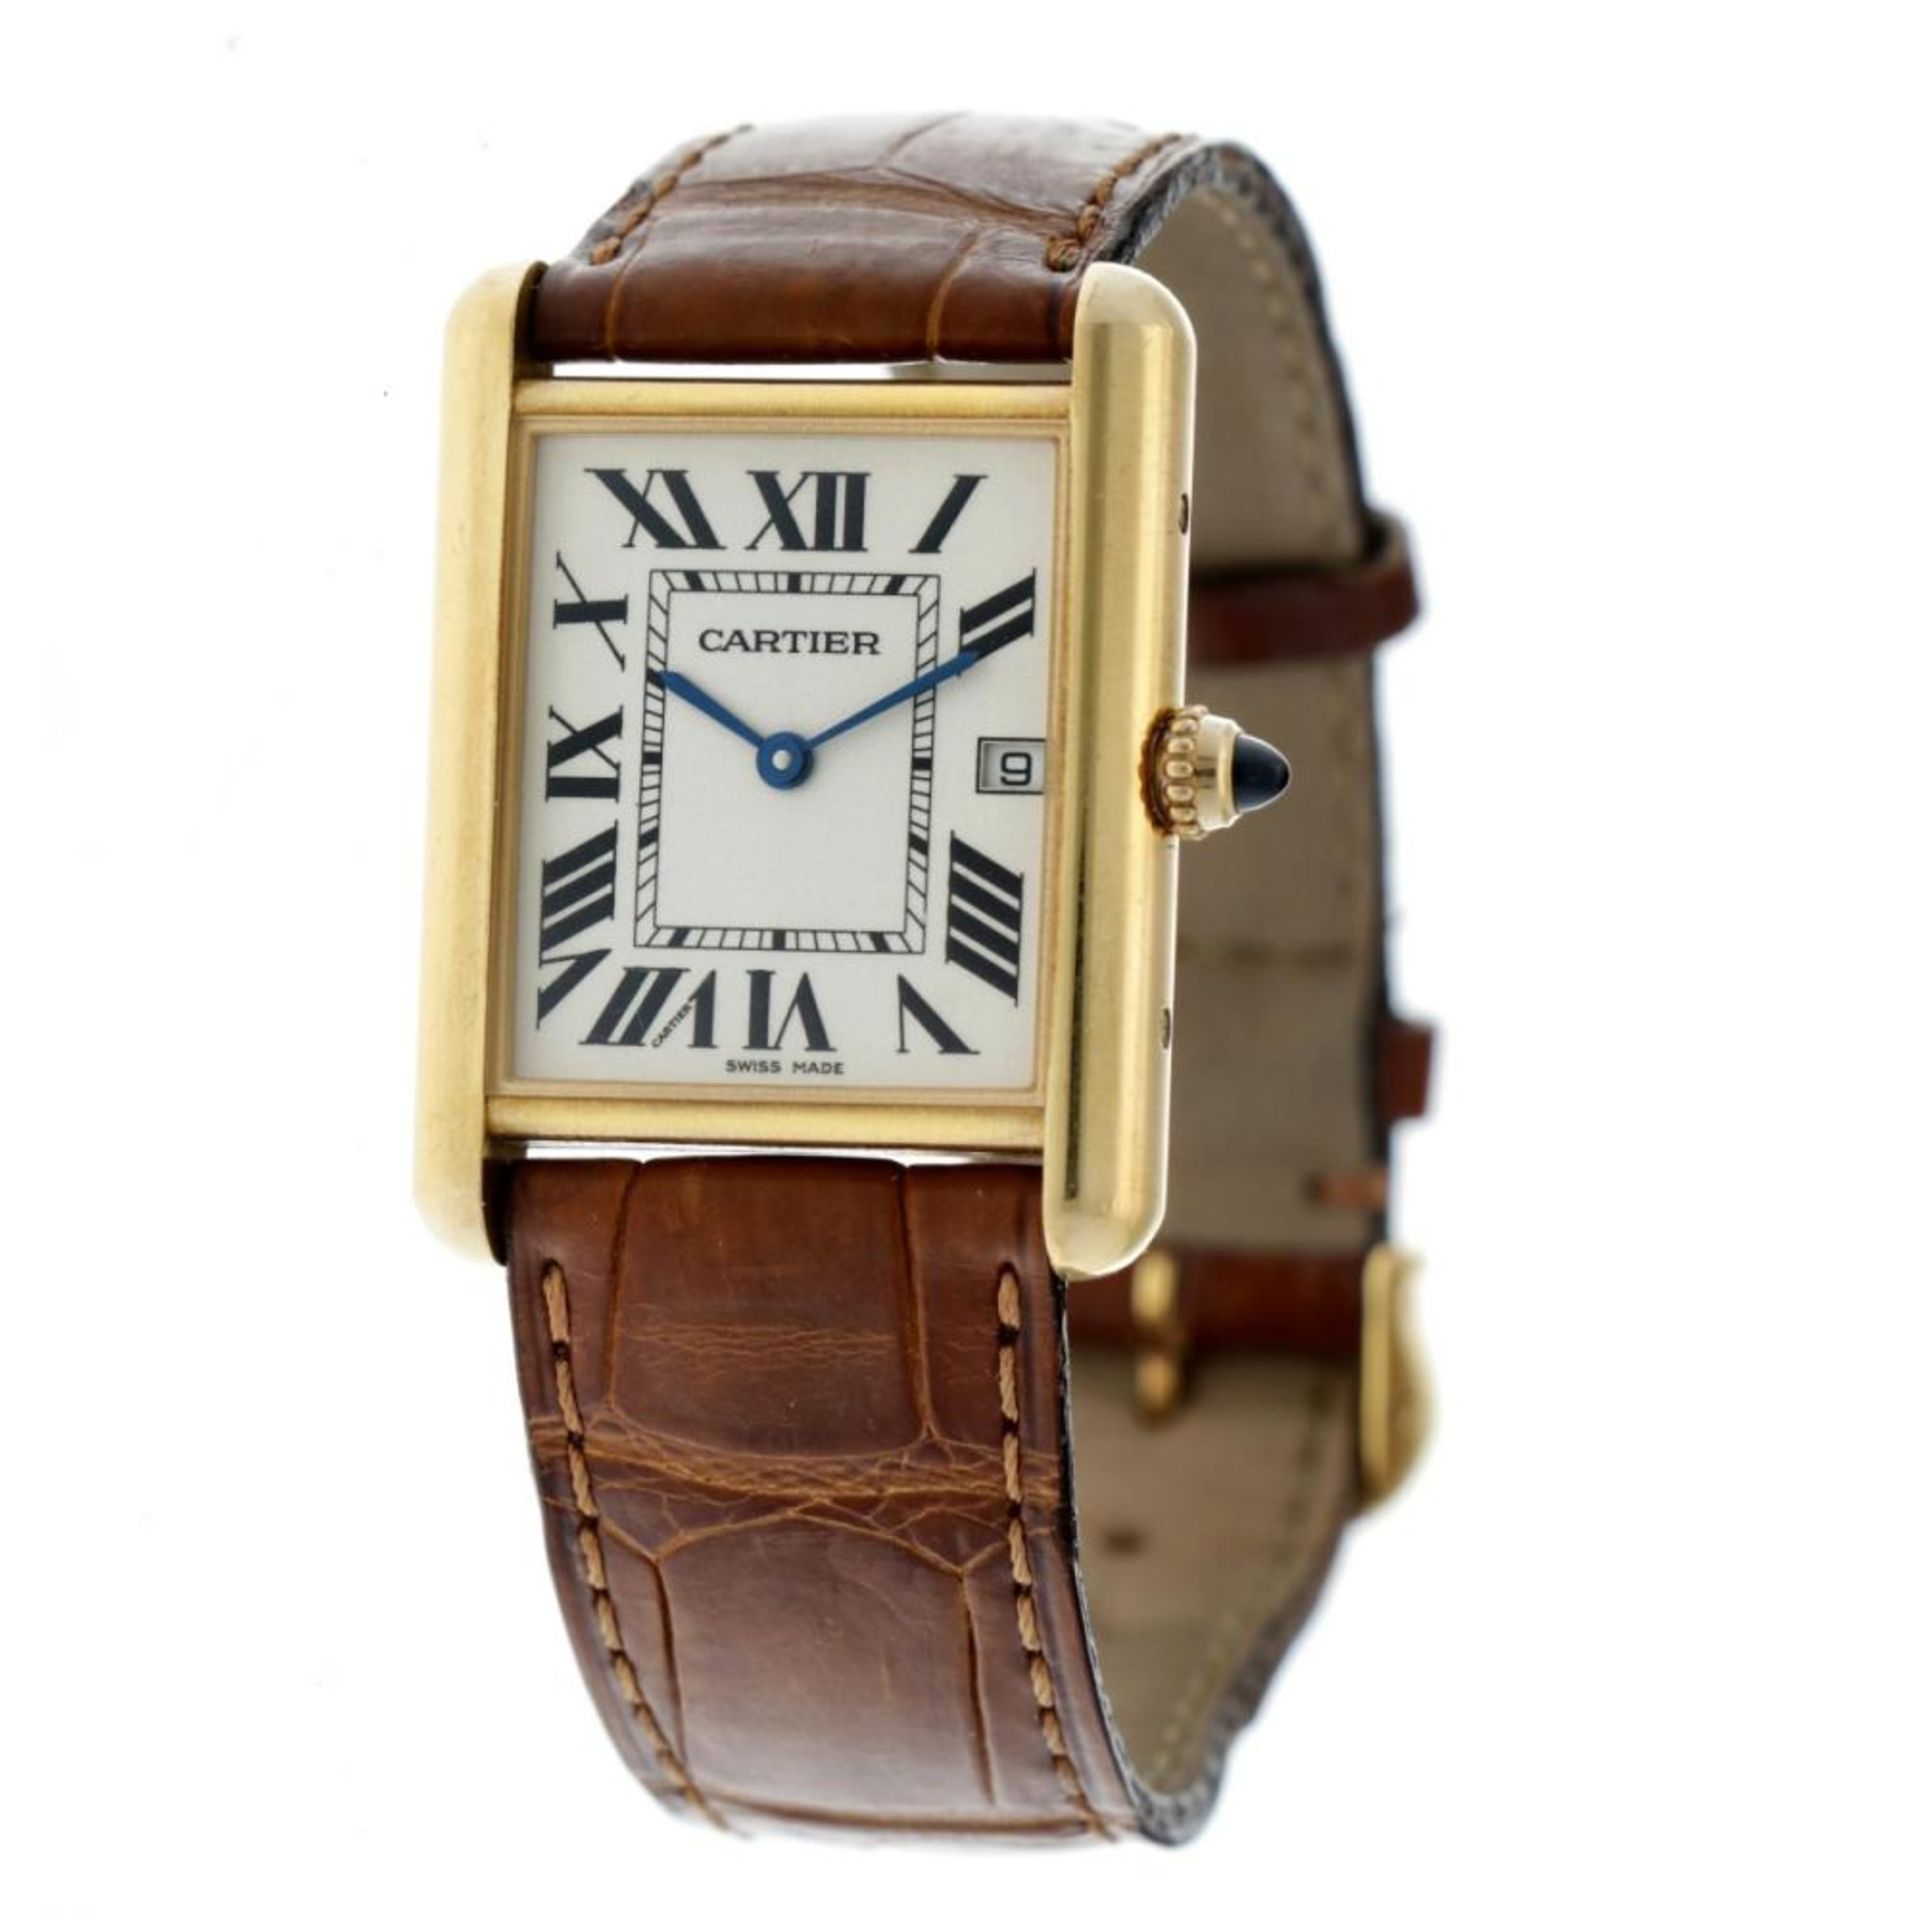 Cartier Tank Louis 2441 - 18 carat gold - Men's watch - approx. 2005. - Image 4 of 10